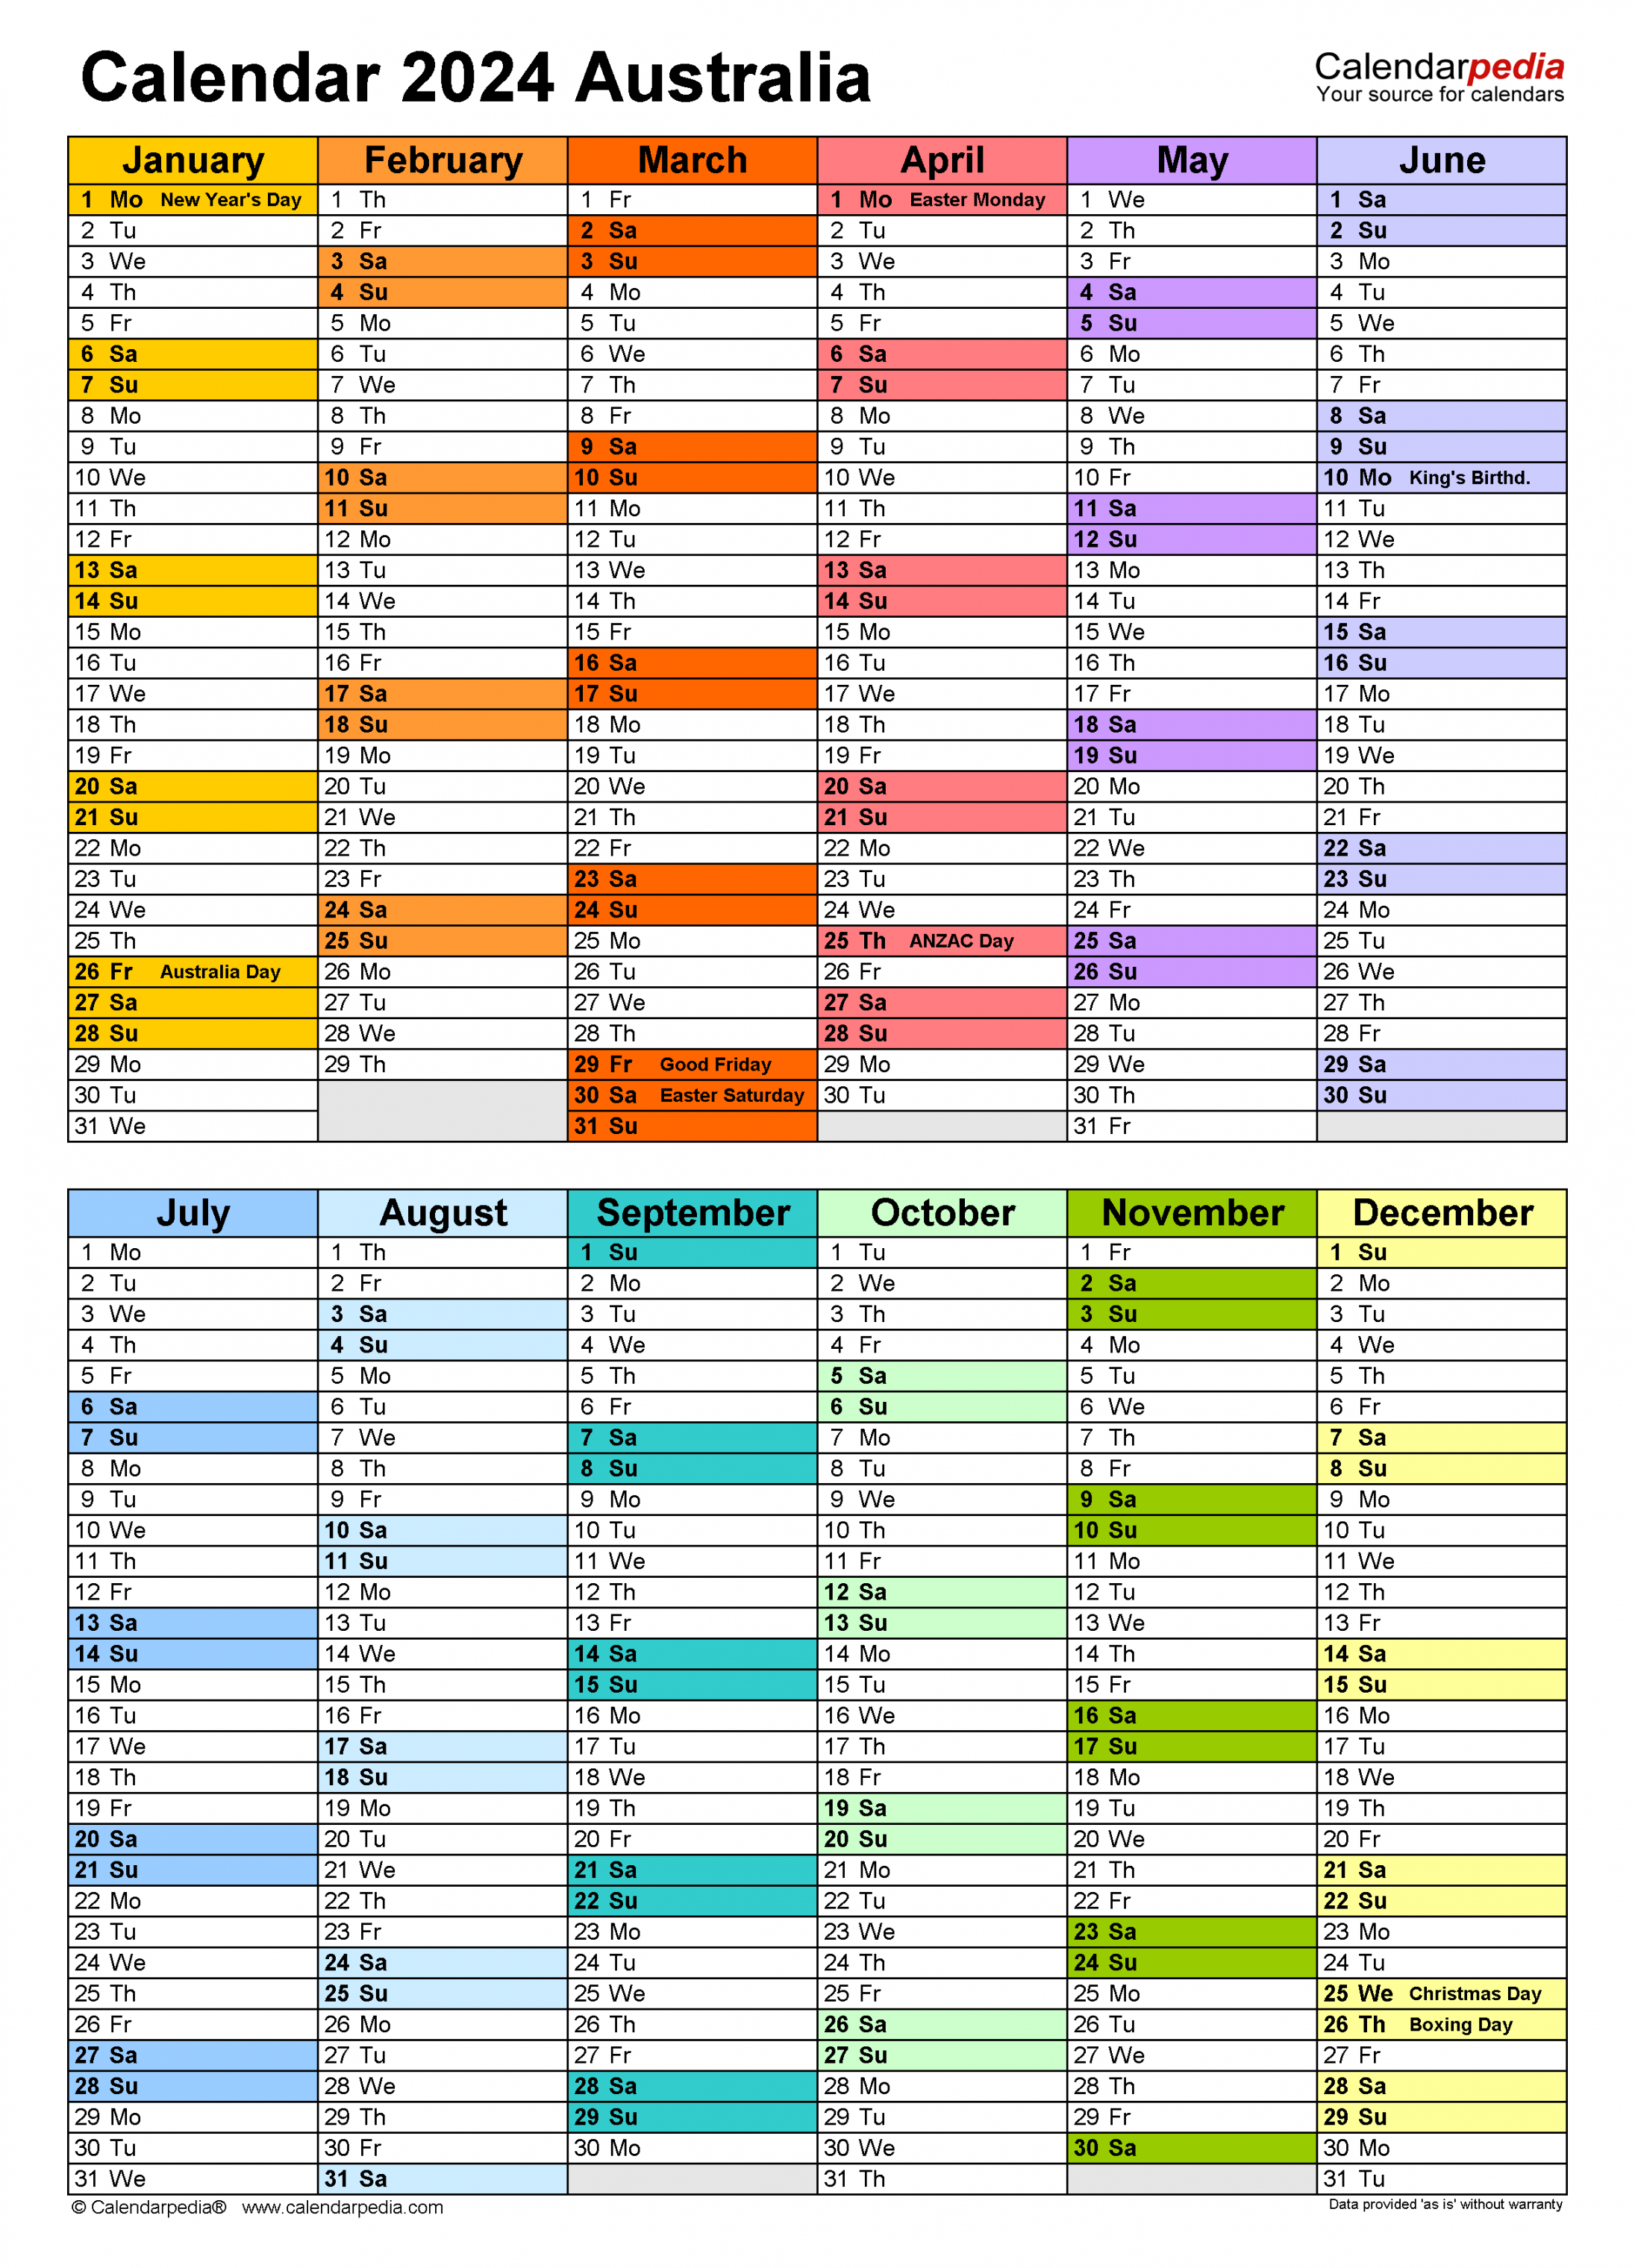 Australia Calendar - Free Printable PDF templates